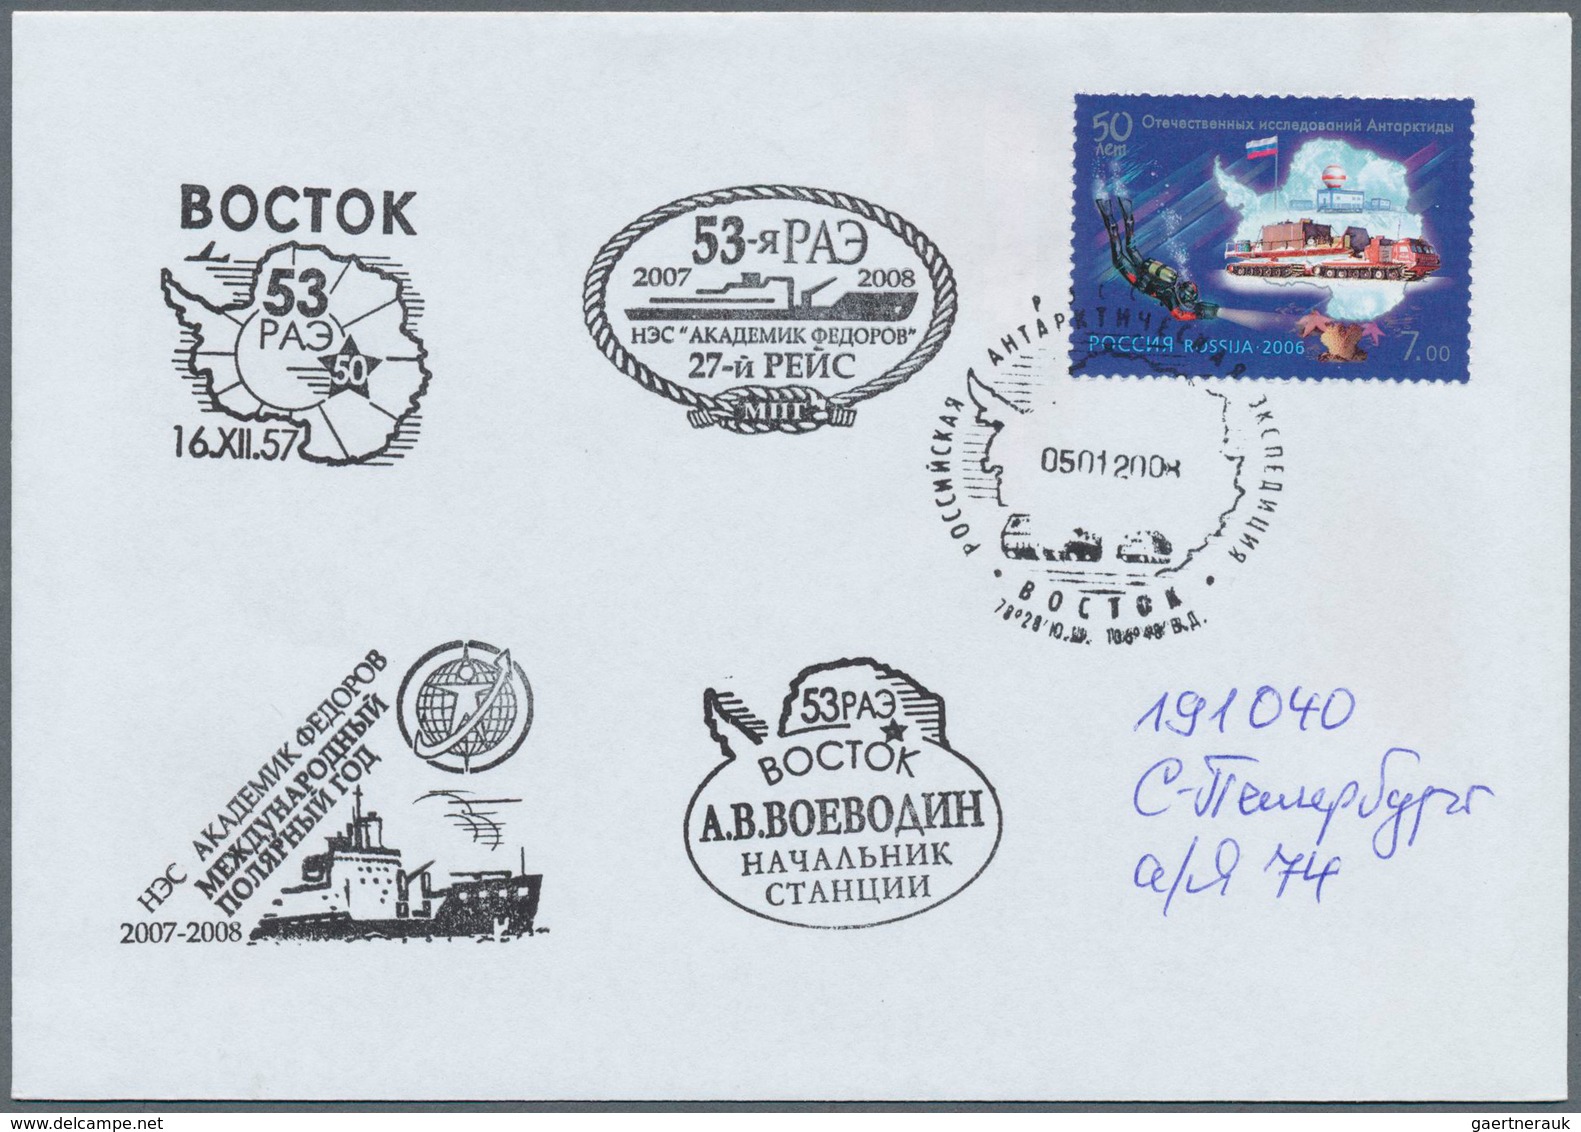 24950 Thematik: Antarktis / antarctic: 1960/2010 (ca.), SOVIET/RUSSIAN ANTARCTIC ACTIVITIES (incl. a few A